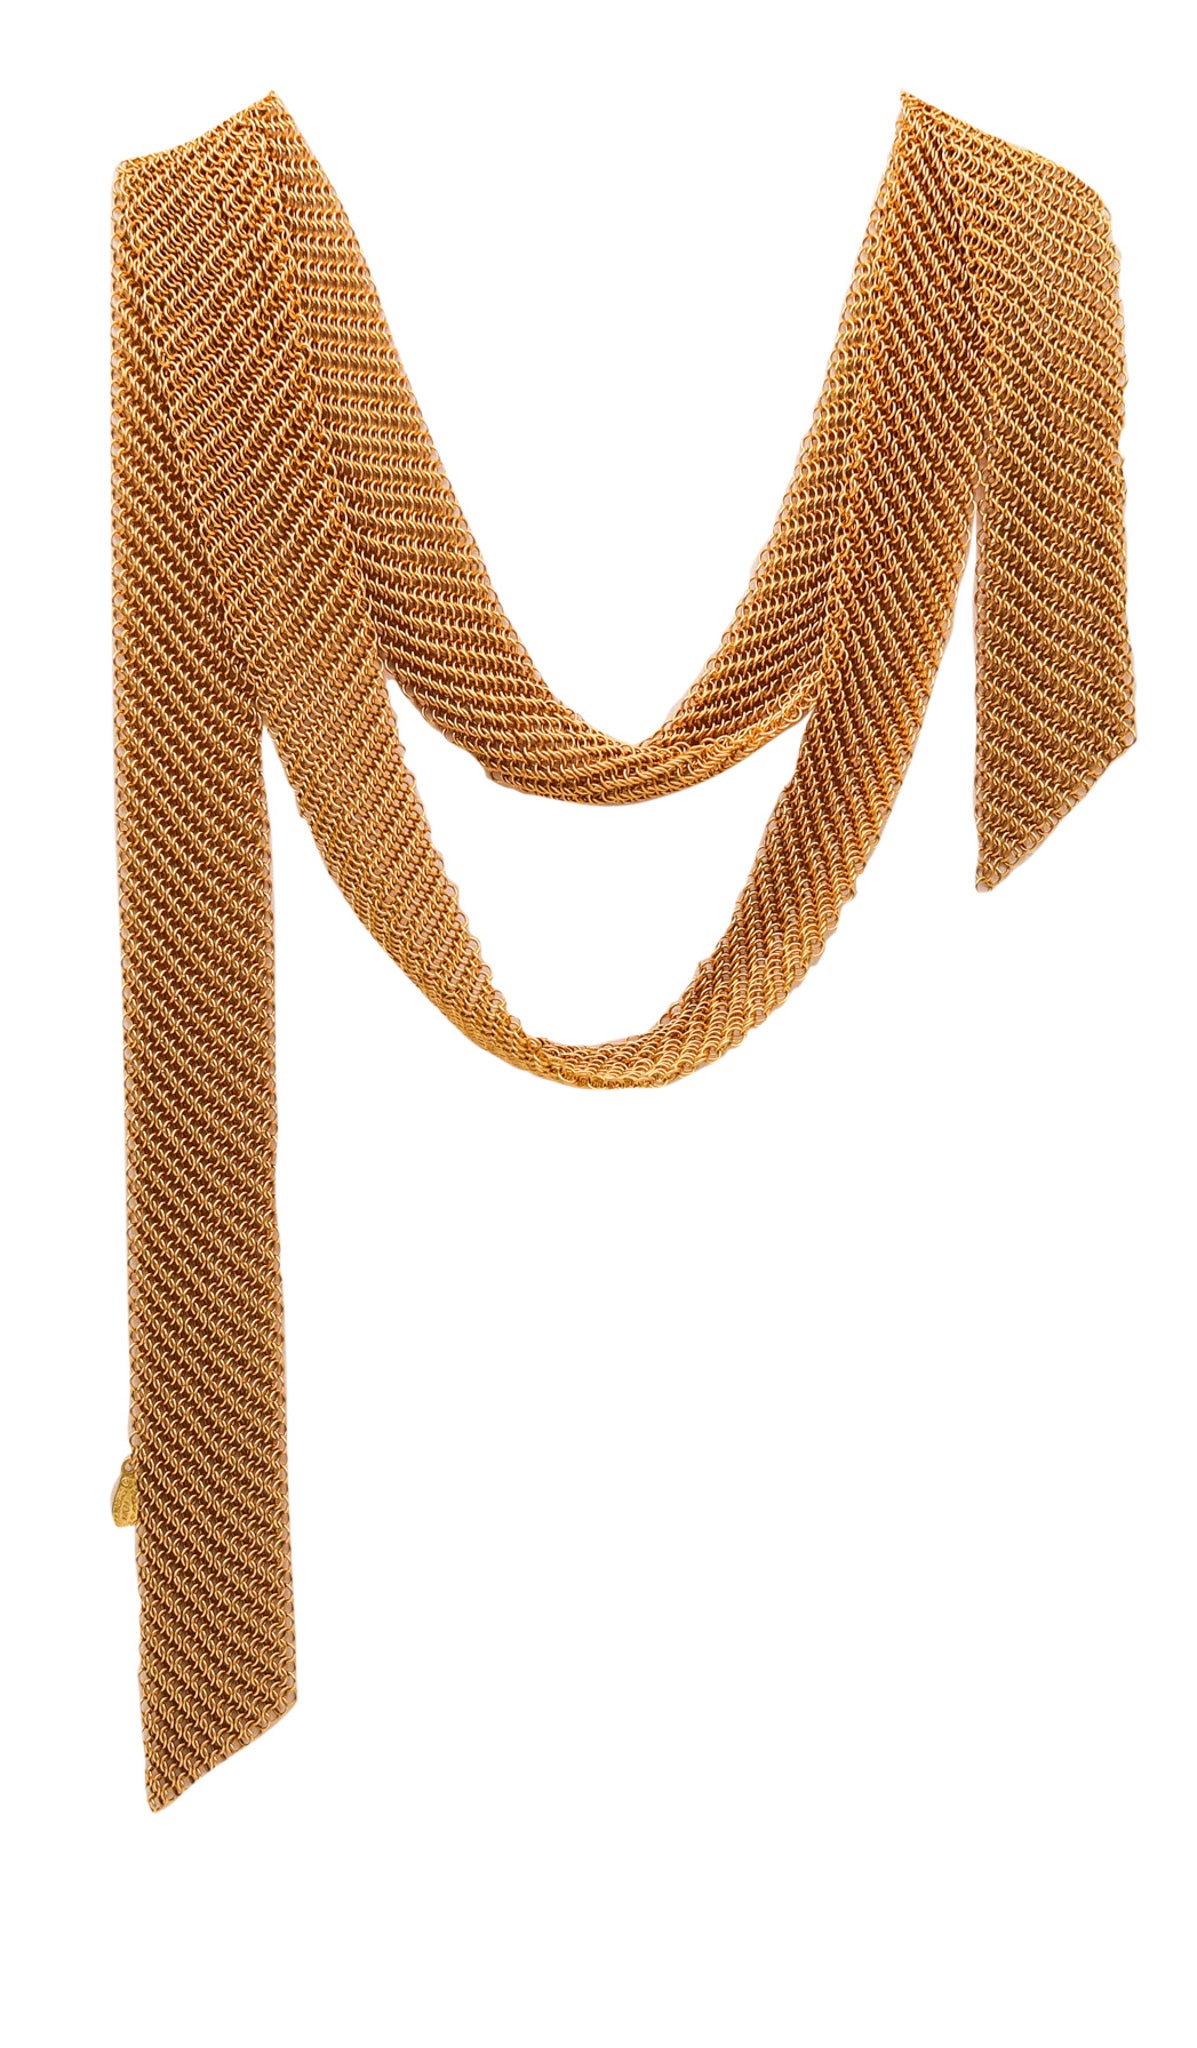 Elsa Peretti™ Mesh scarf necklace in sterling silver, small. | Tiffany & Co.